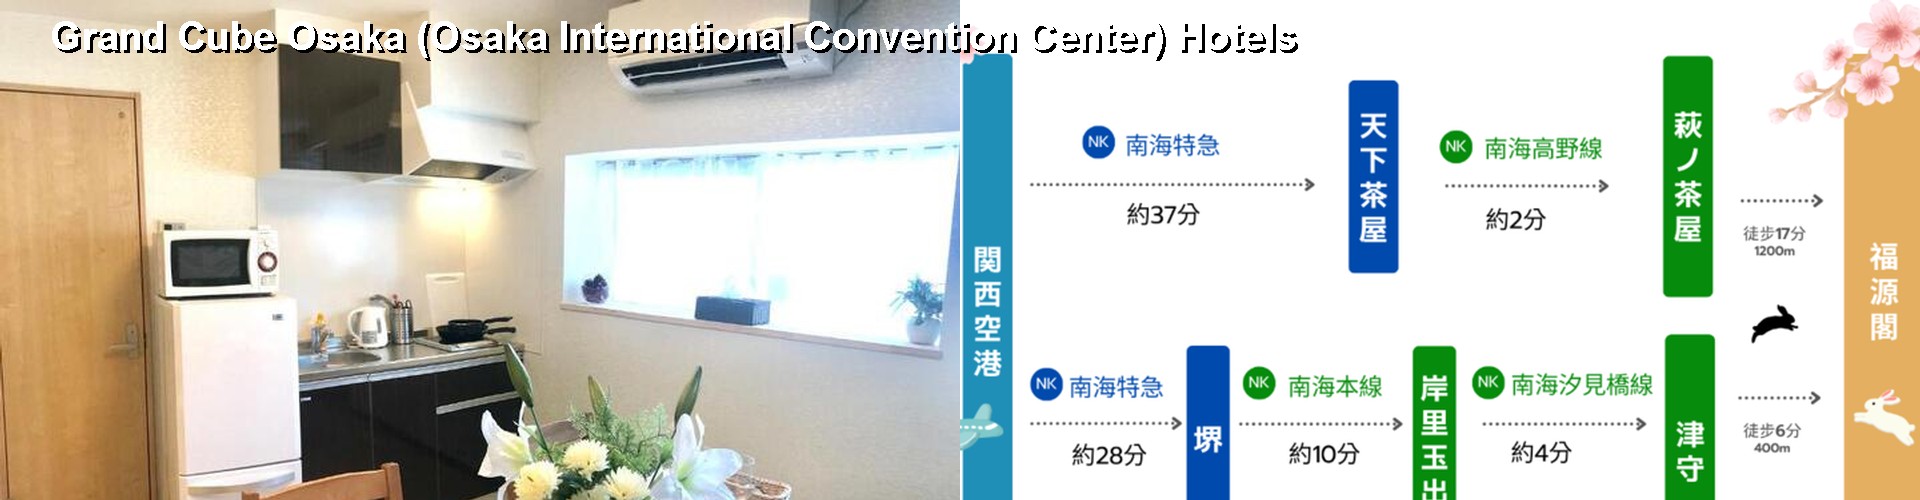 5 Best Hotels near Grand Cube Osaka (Osaka International Convention Center)